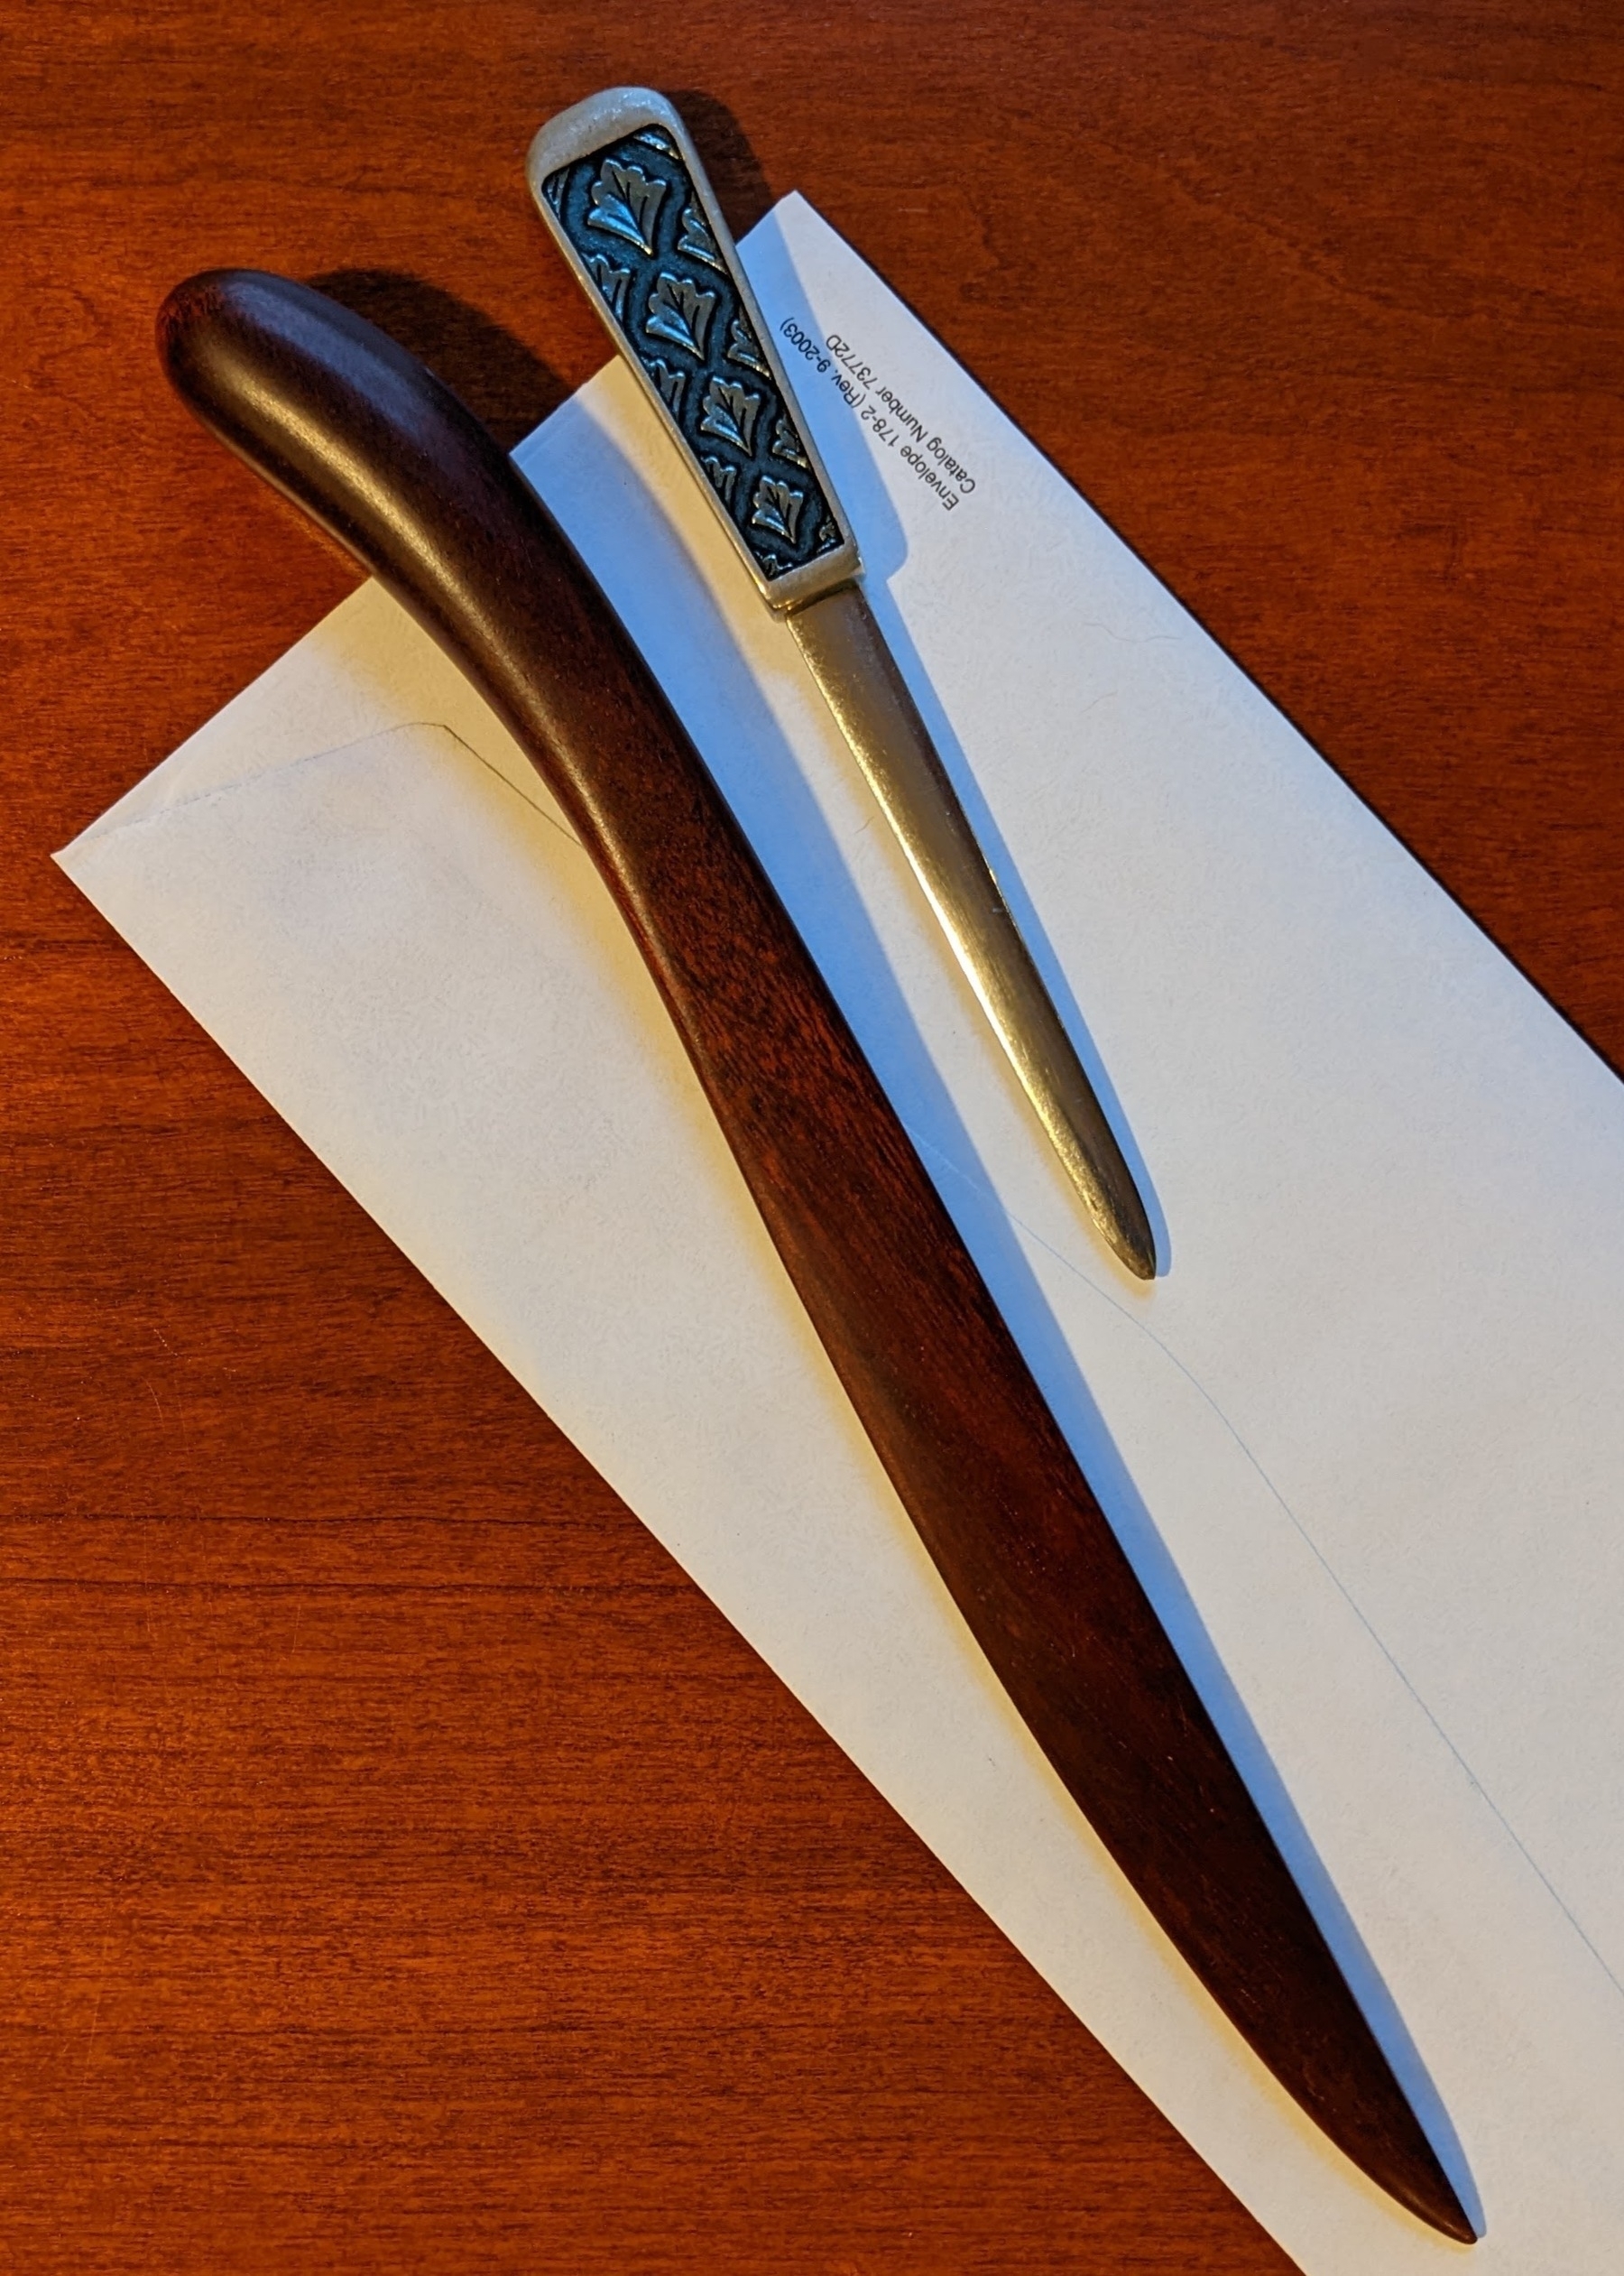 carved wooden letter opener and enameled pewter letter opener resting on top of an envelope